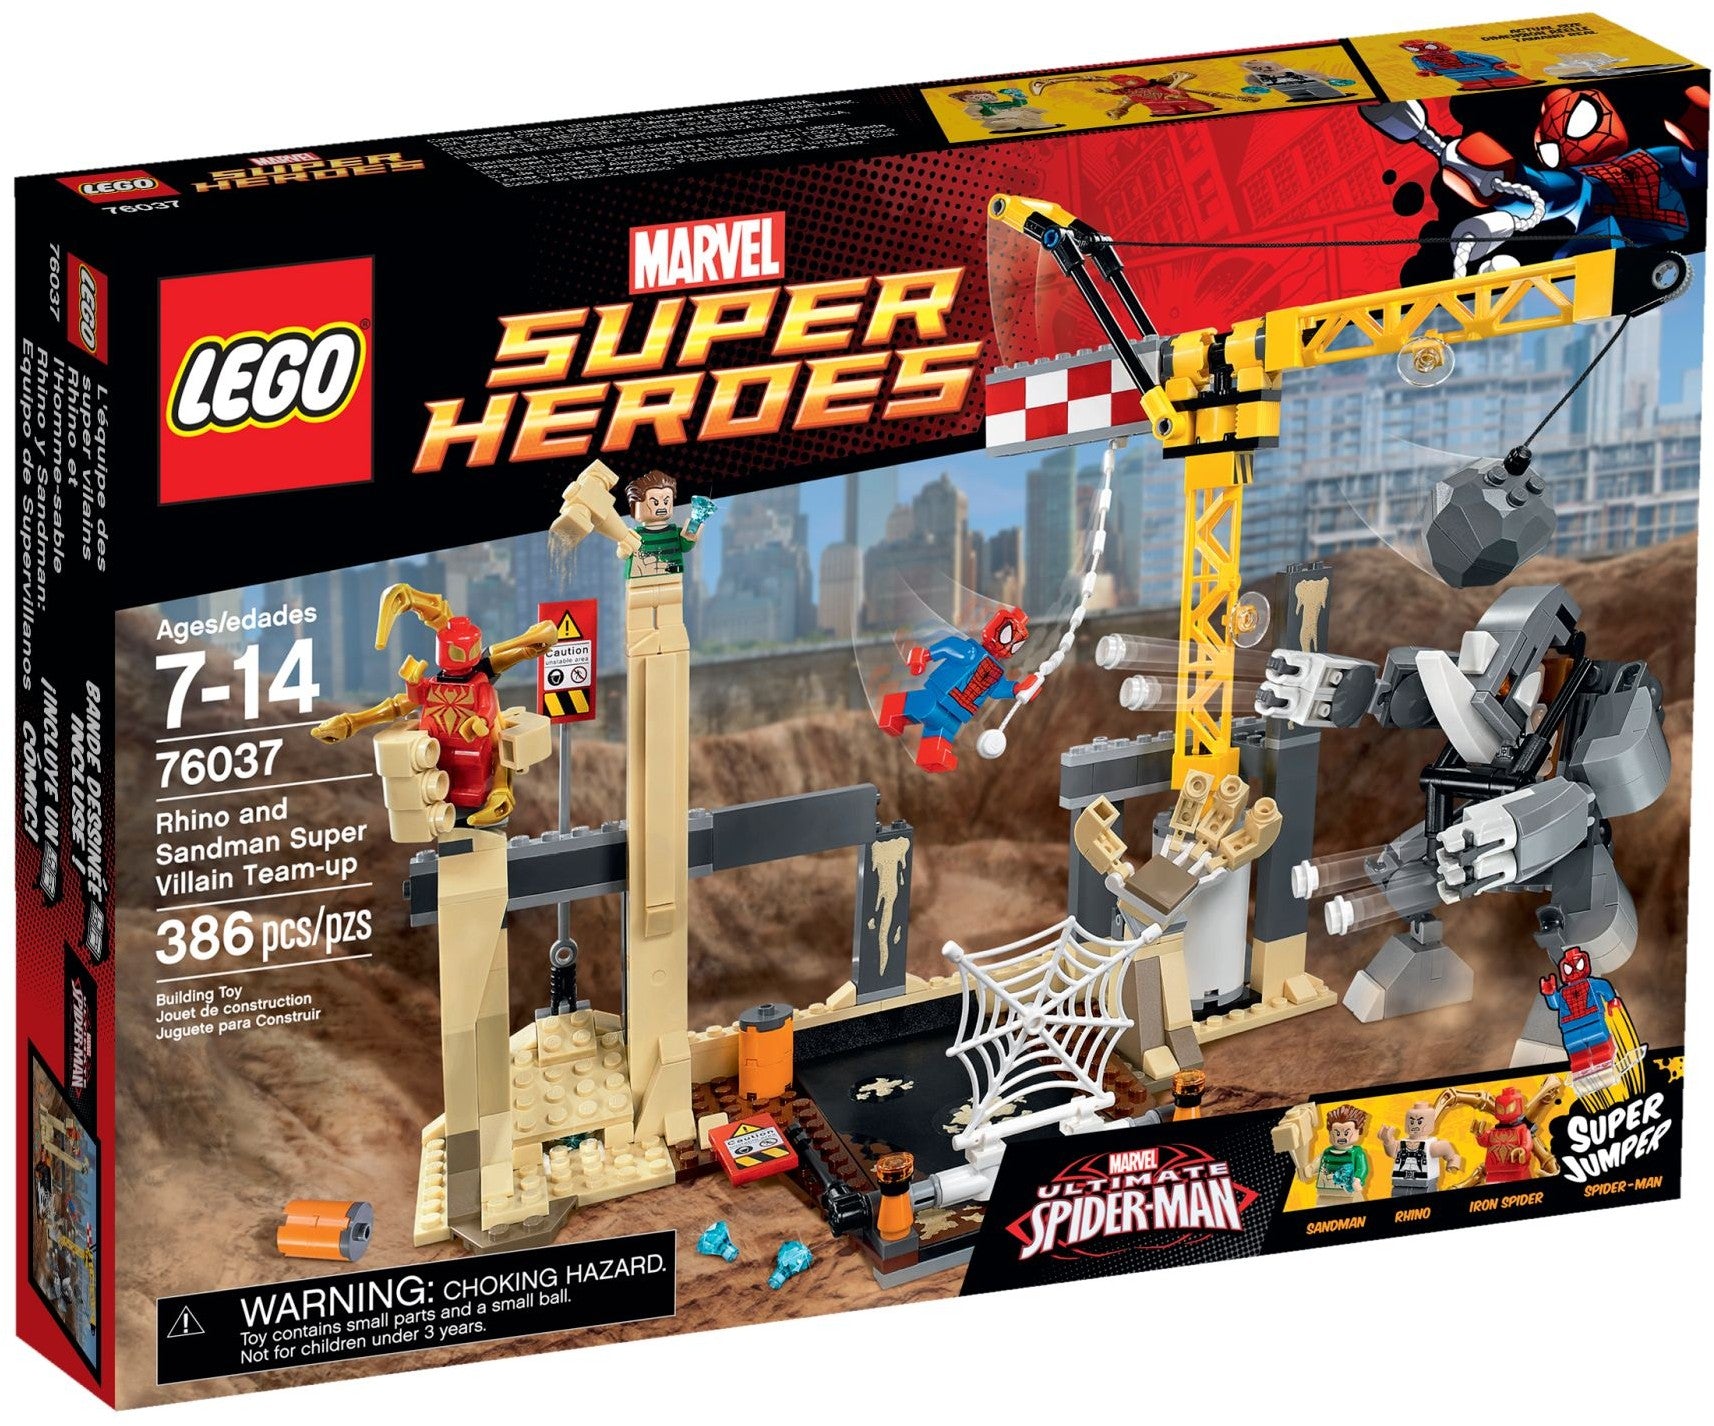 Lego Super Heroes 76037 - Rhino and Sandman Super Villain